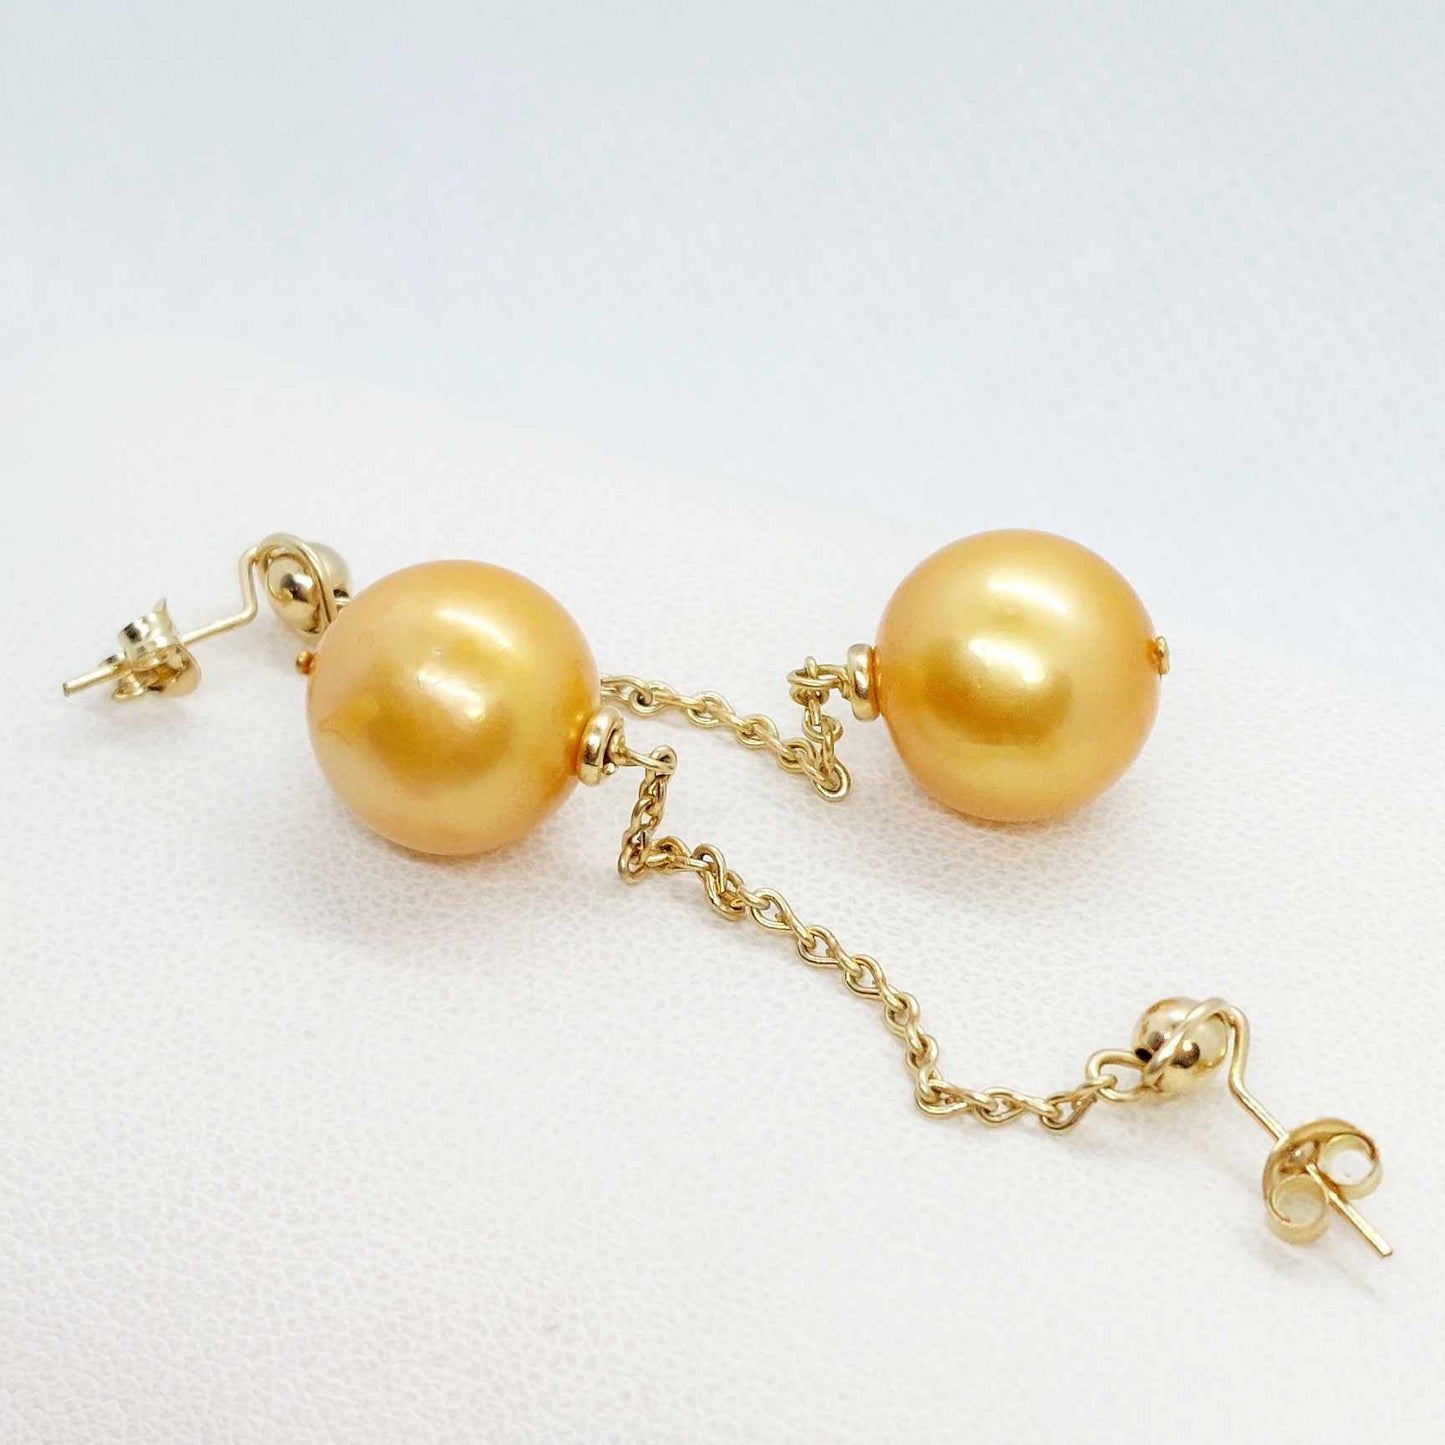 Natural Freshwater Golden Pearl Set in 13mm Stones set in Solid 10K Gold